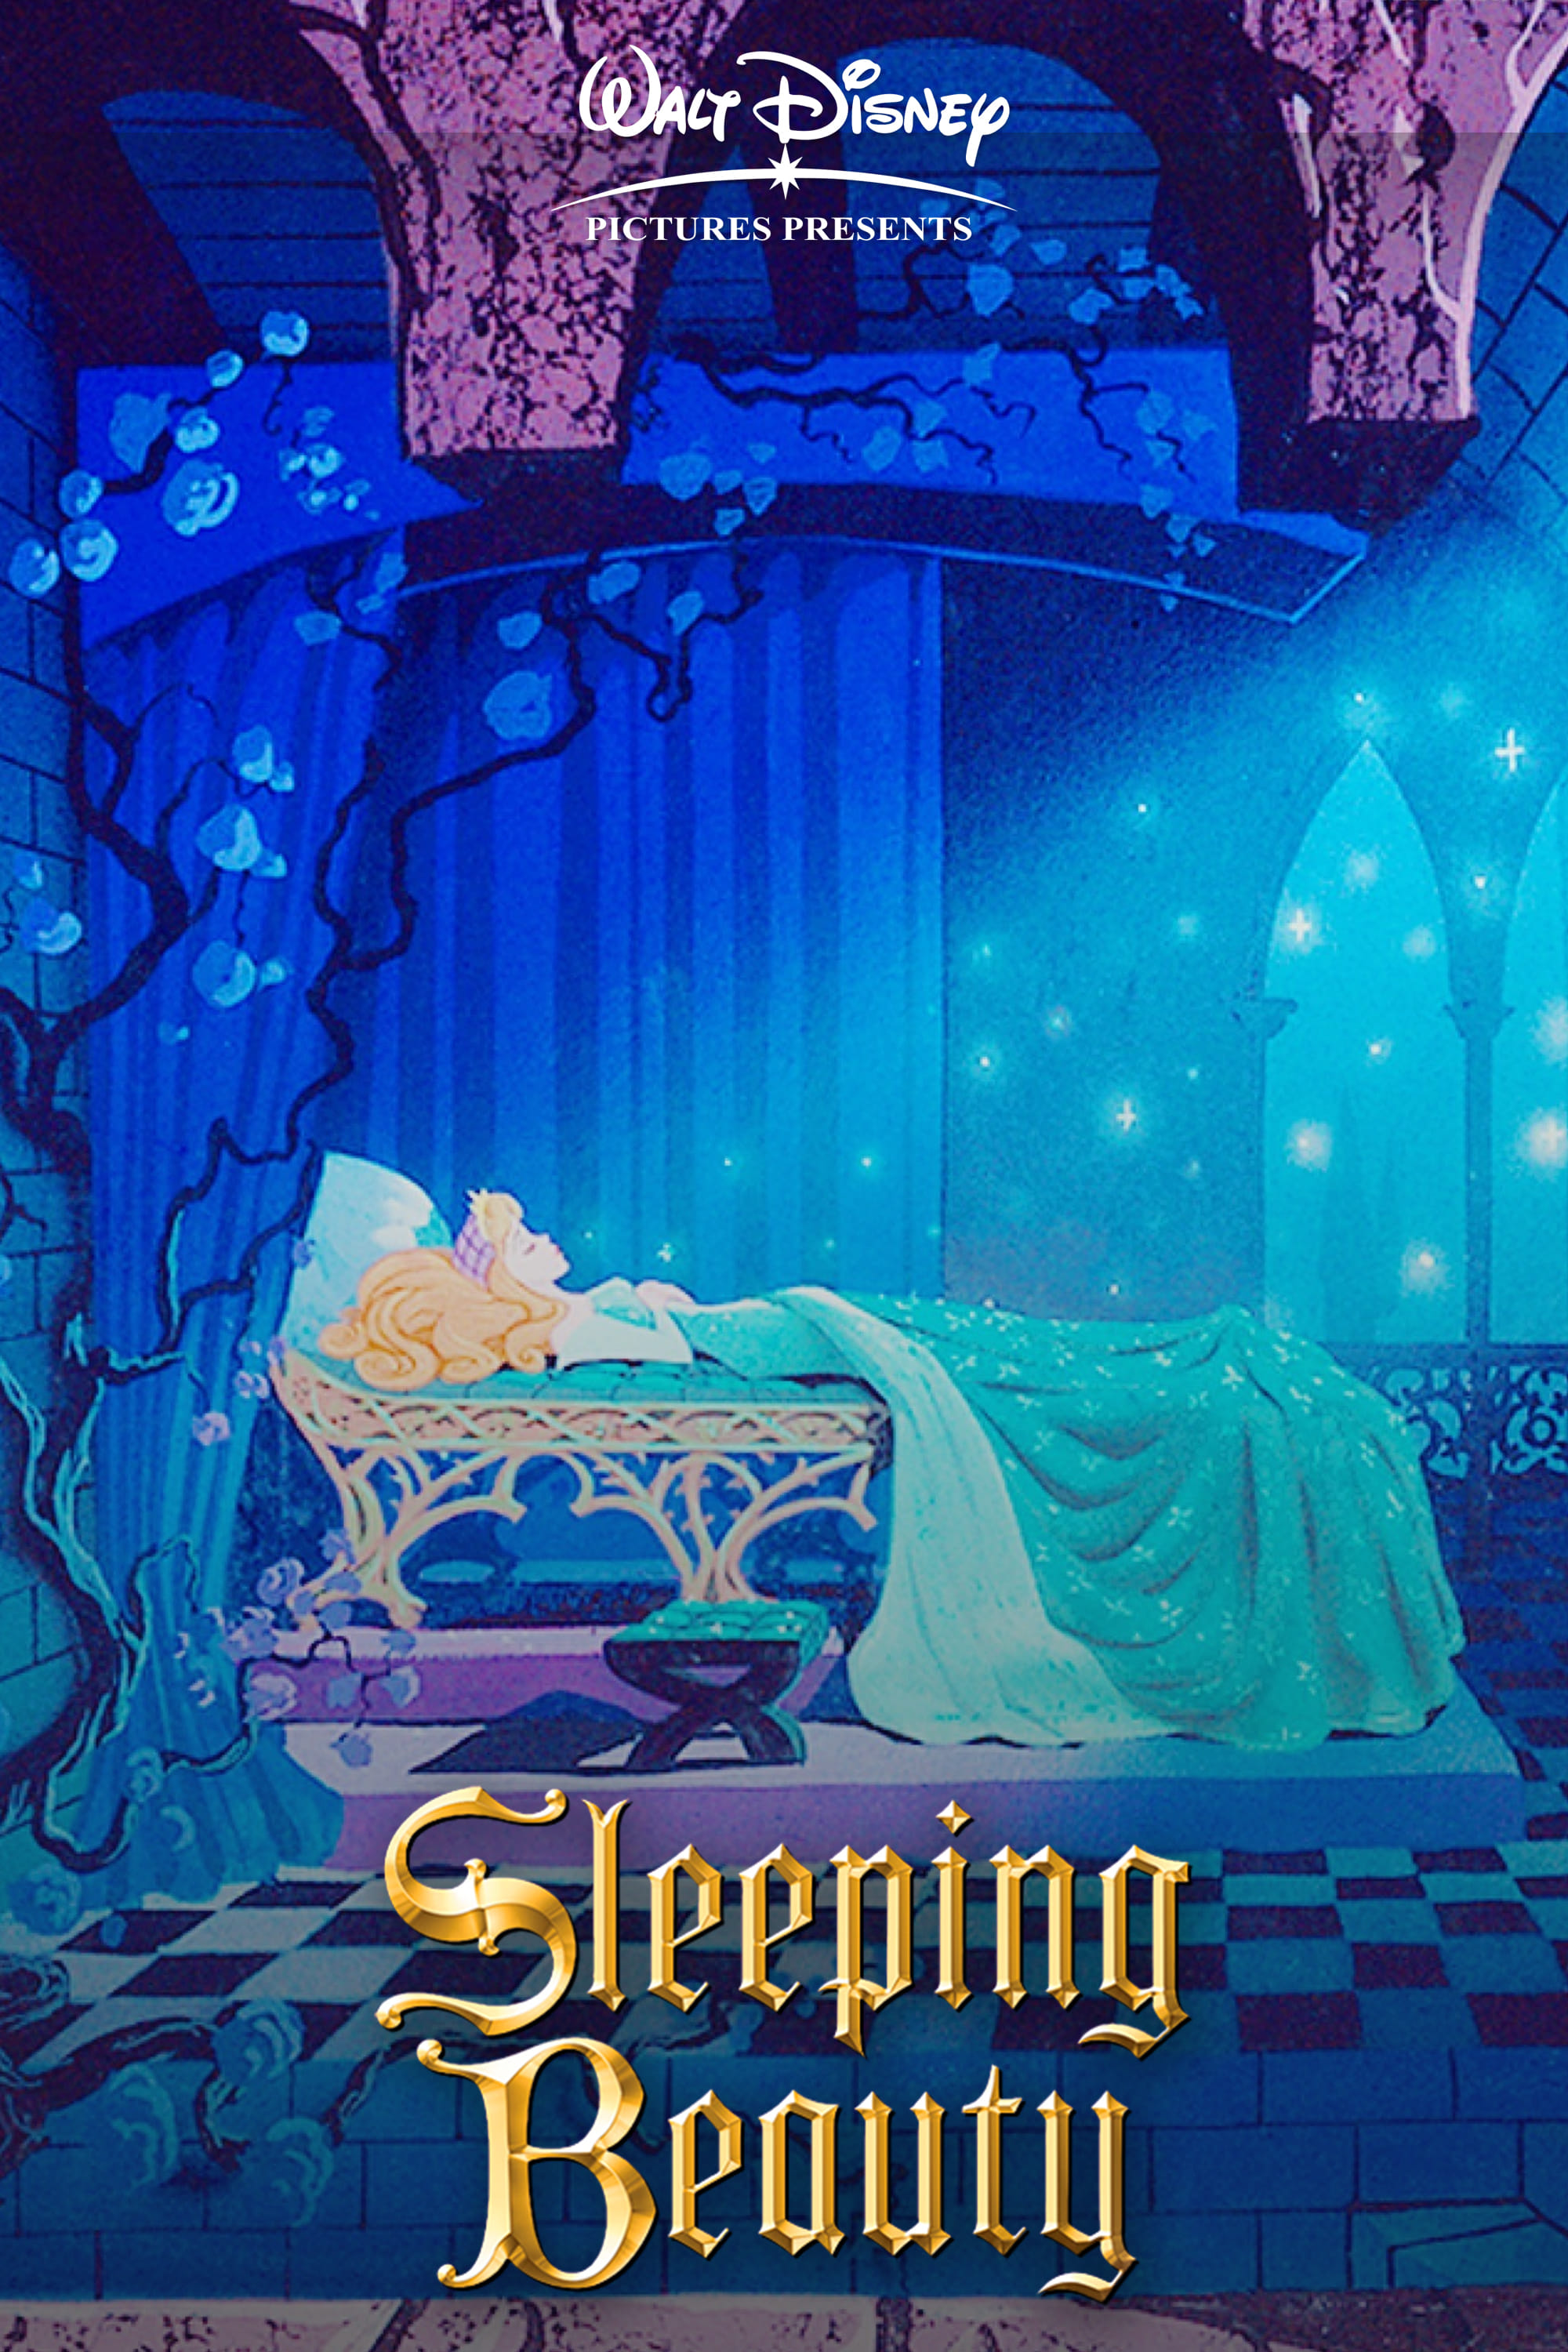 Sleeping Beauty (1959) Disney movie